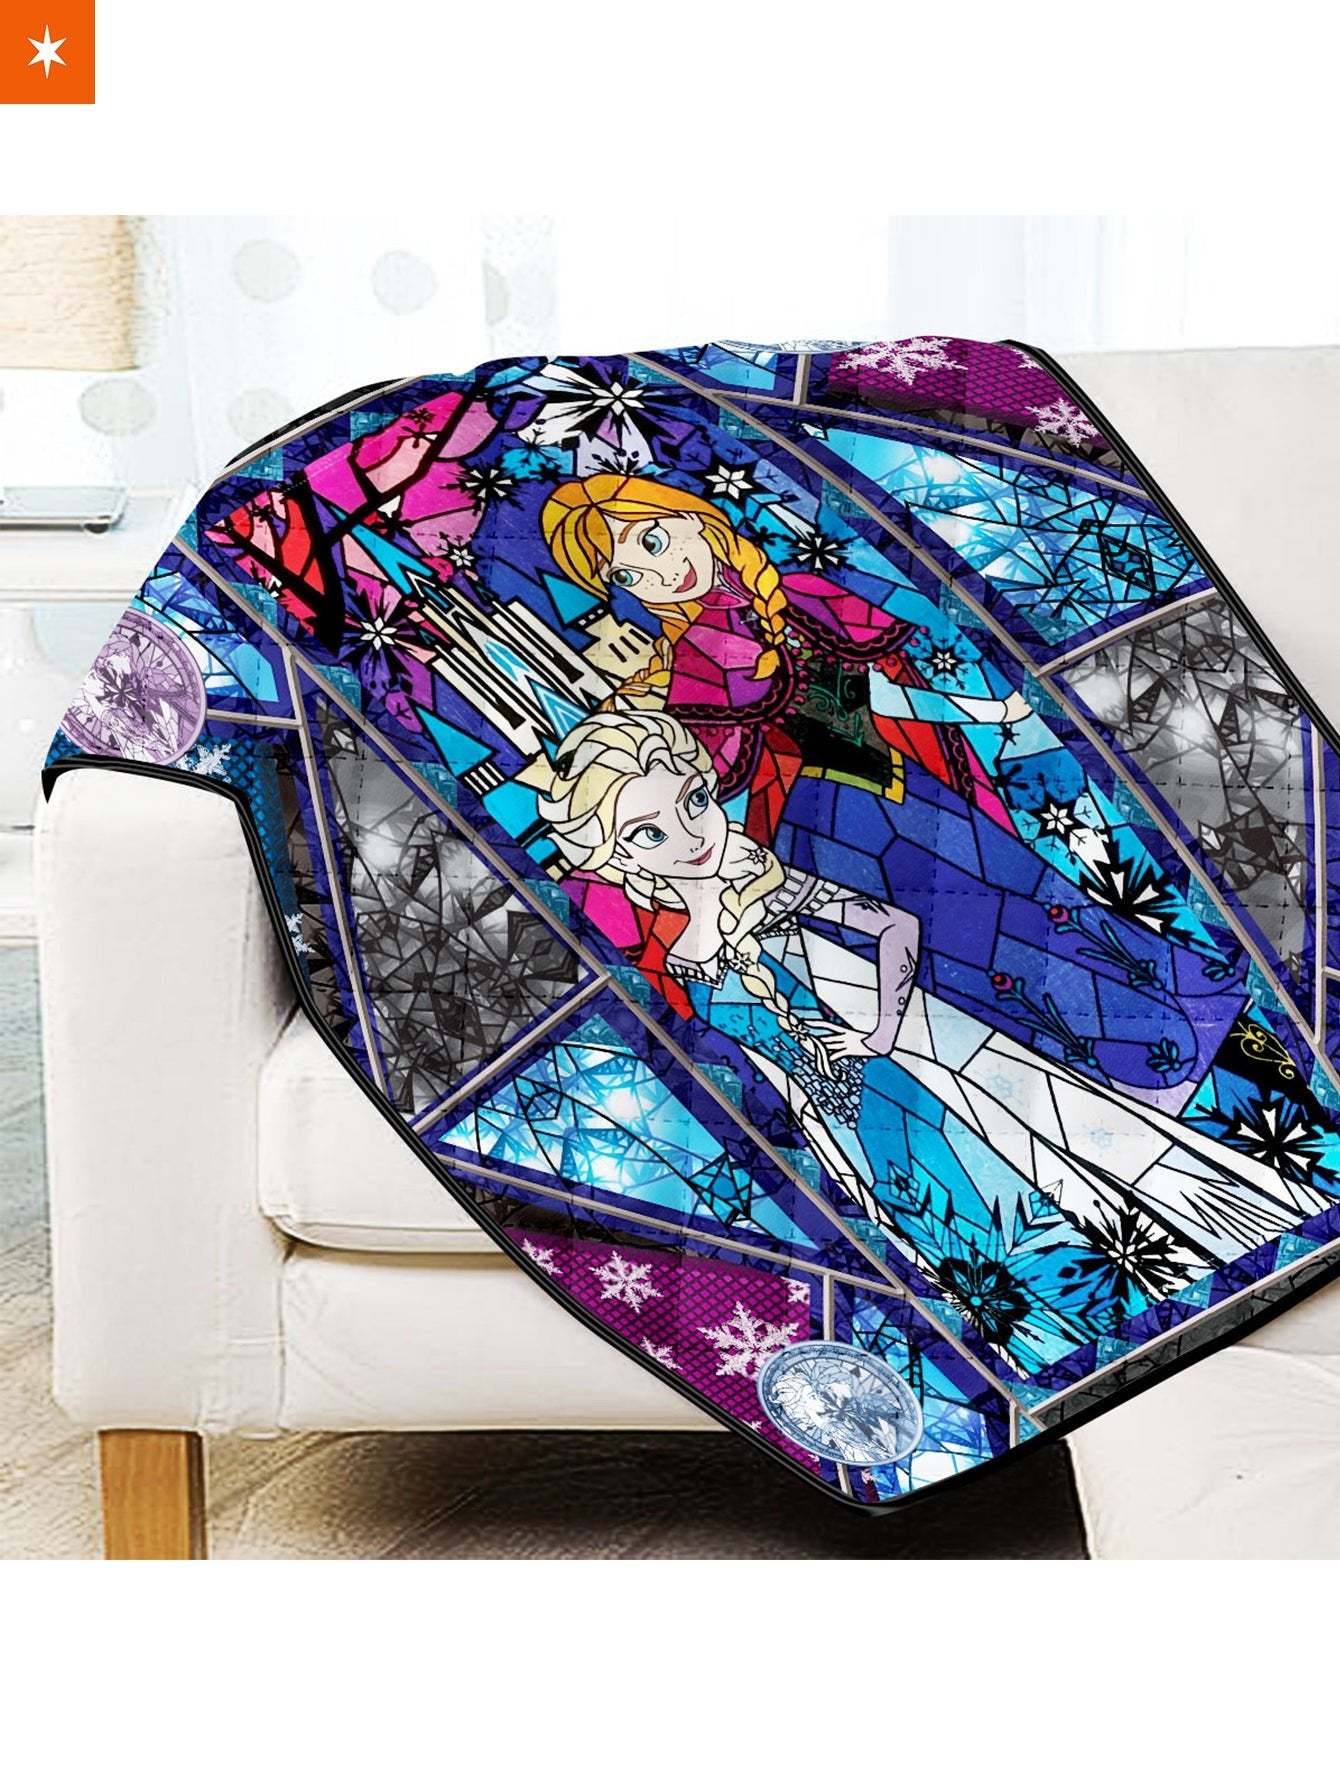 Fandomaniax - Frozen Stained Glass Quilt Blanket